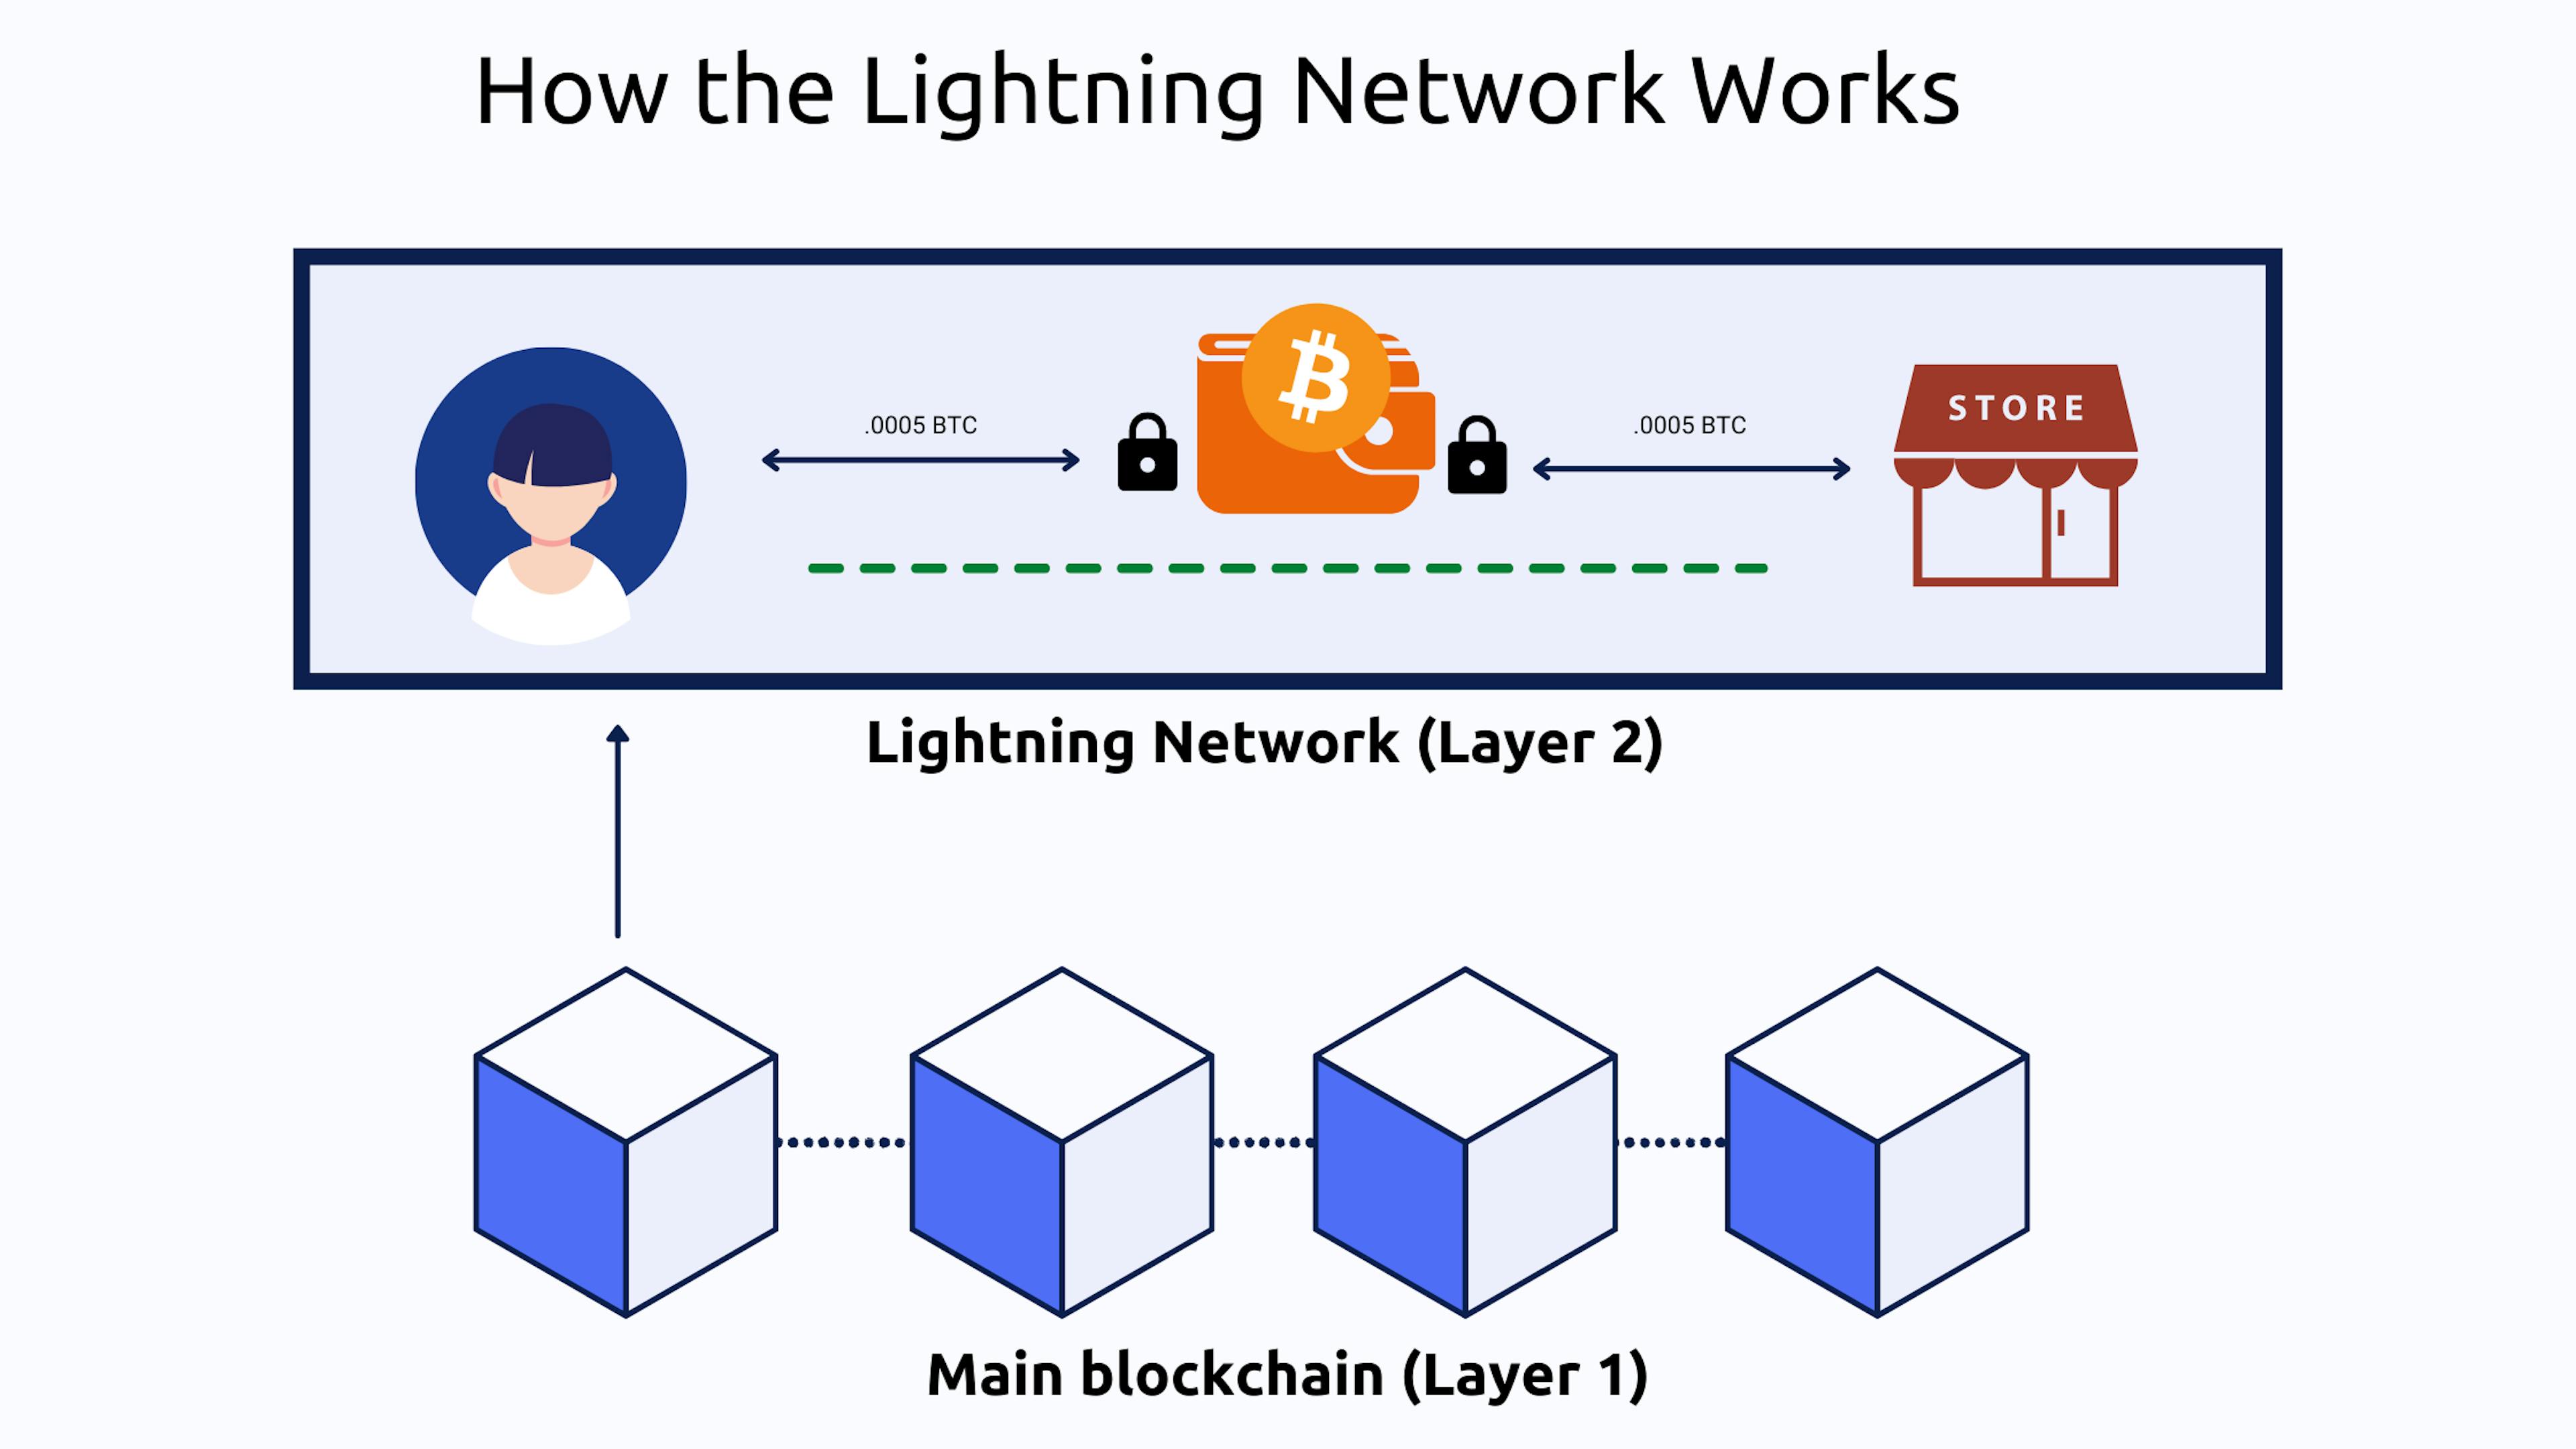 Bildquelle: https://bitpay.com/blog/what-is-the-lightning-network/